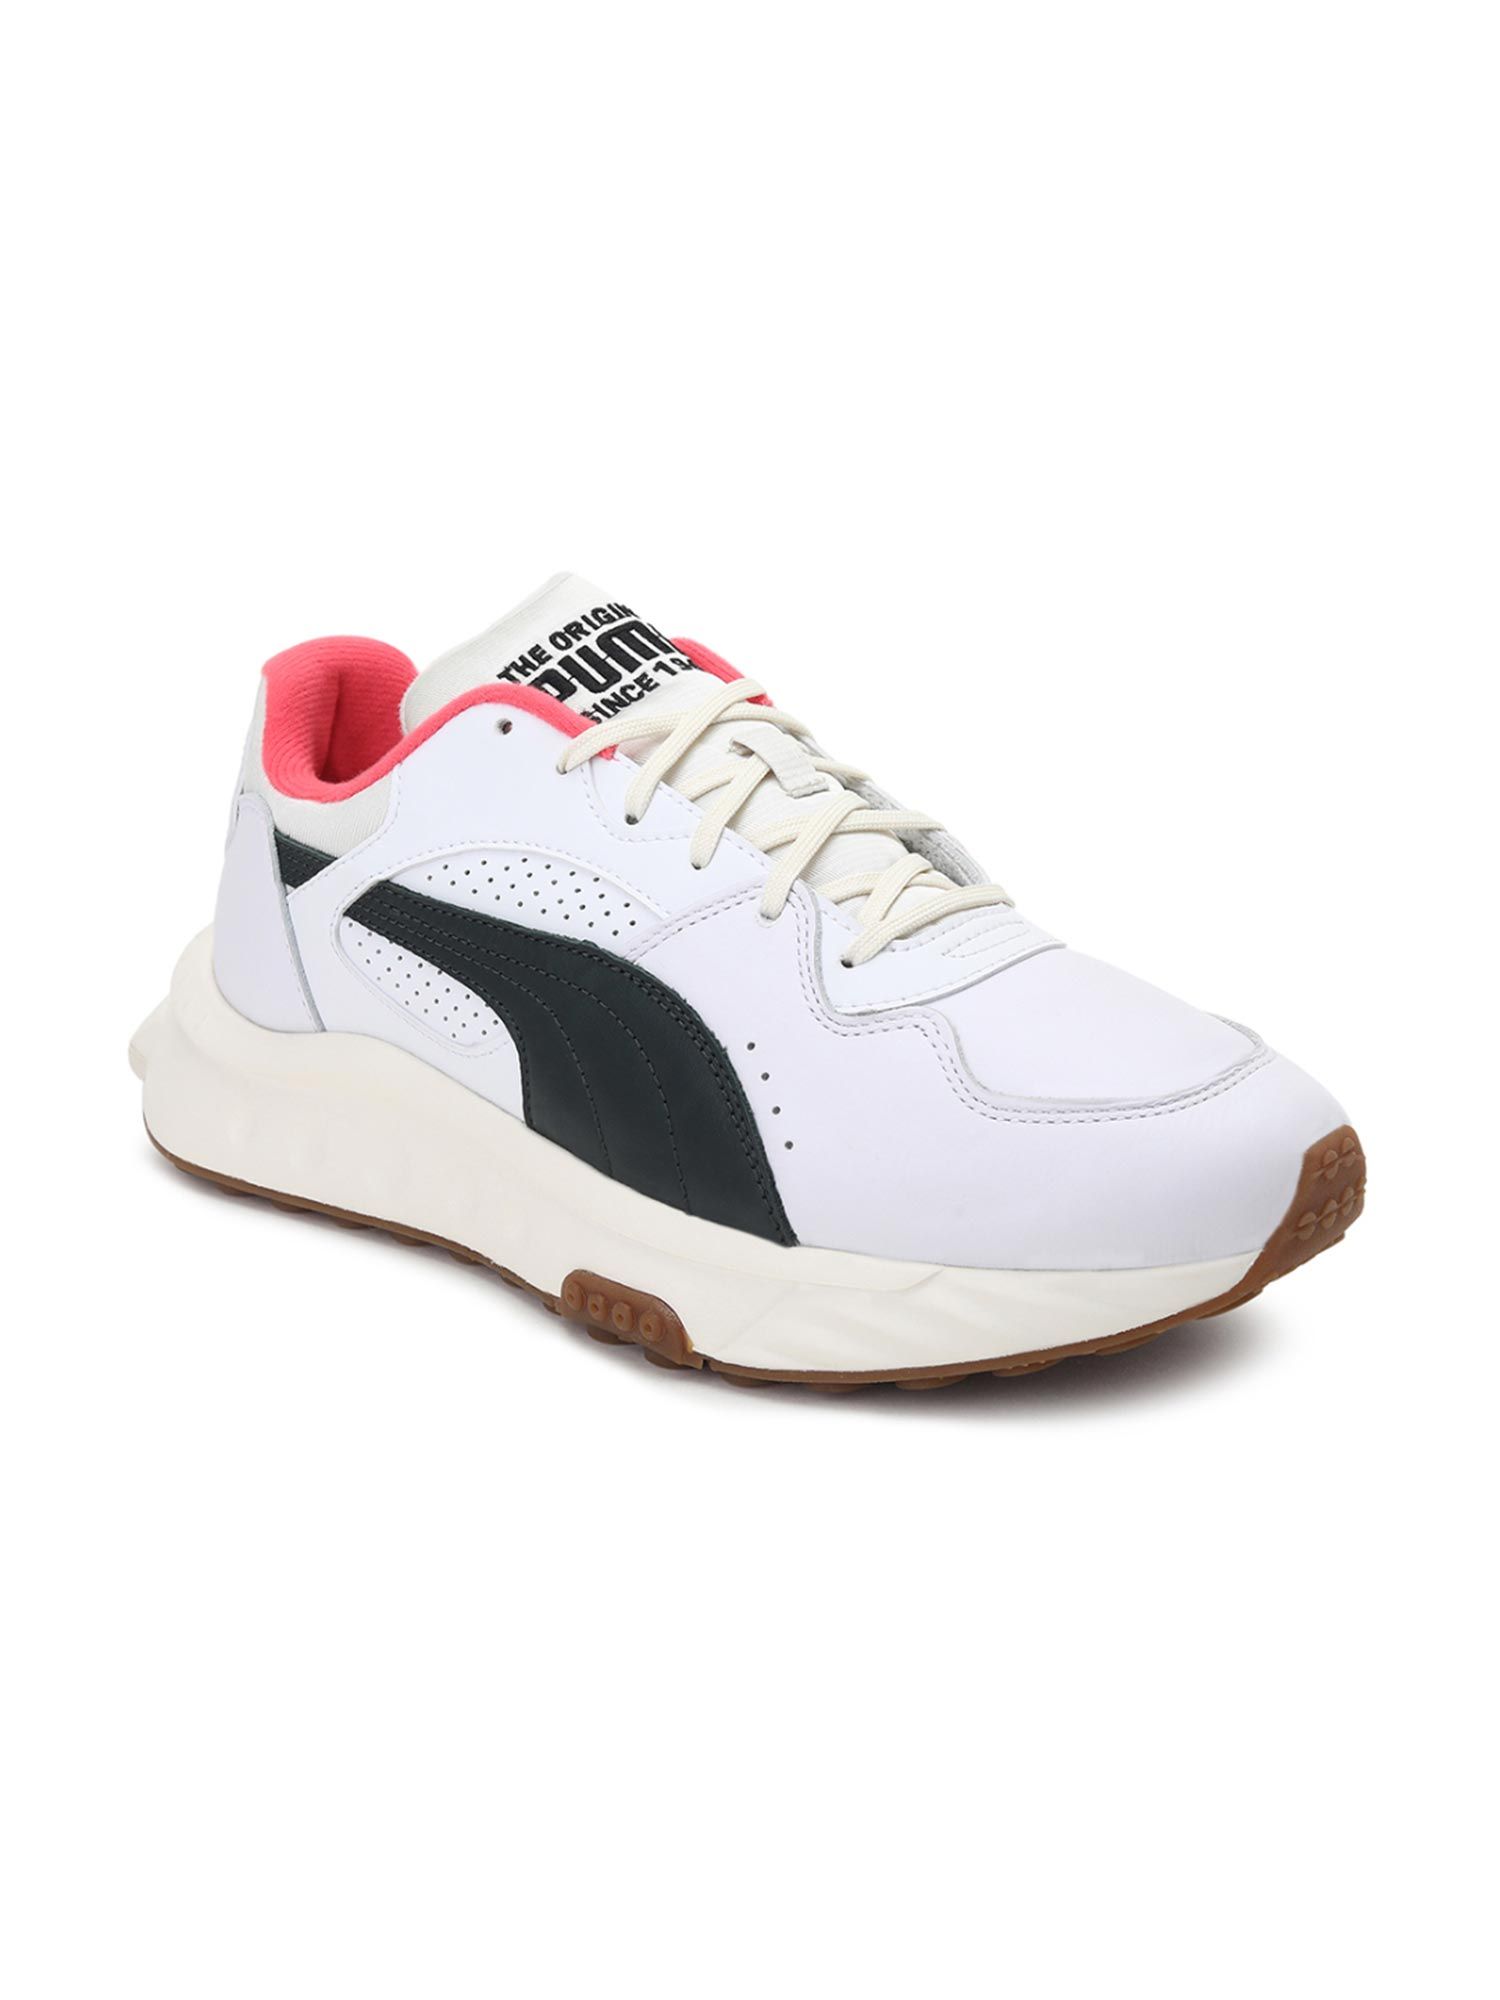 Puma Wild Rider PxP Unisex White Sneakers (UK 10)